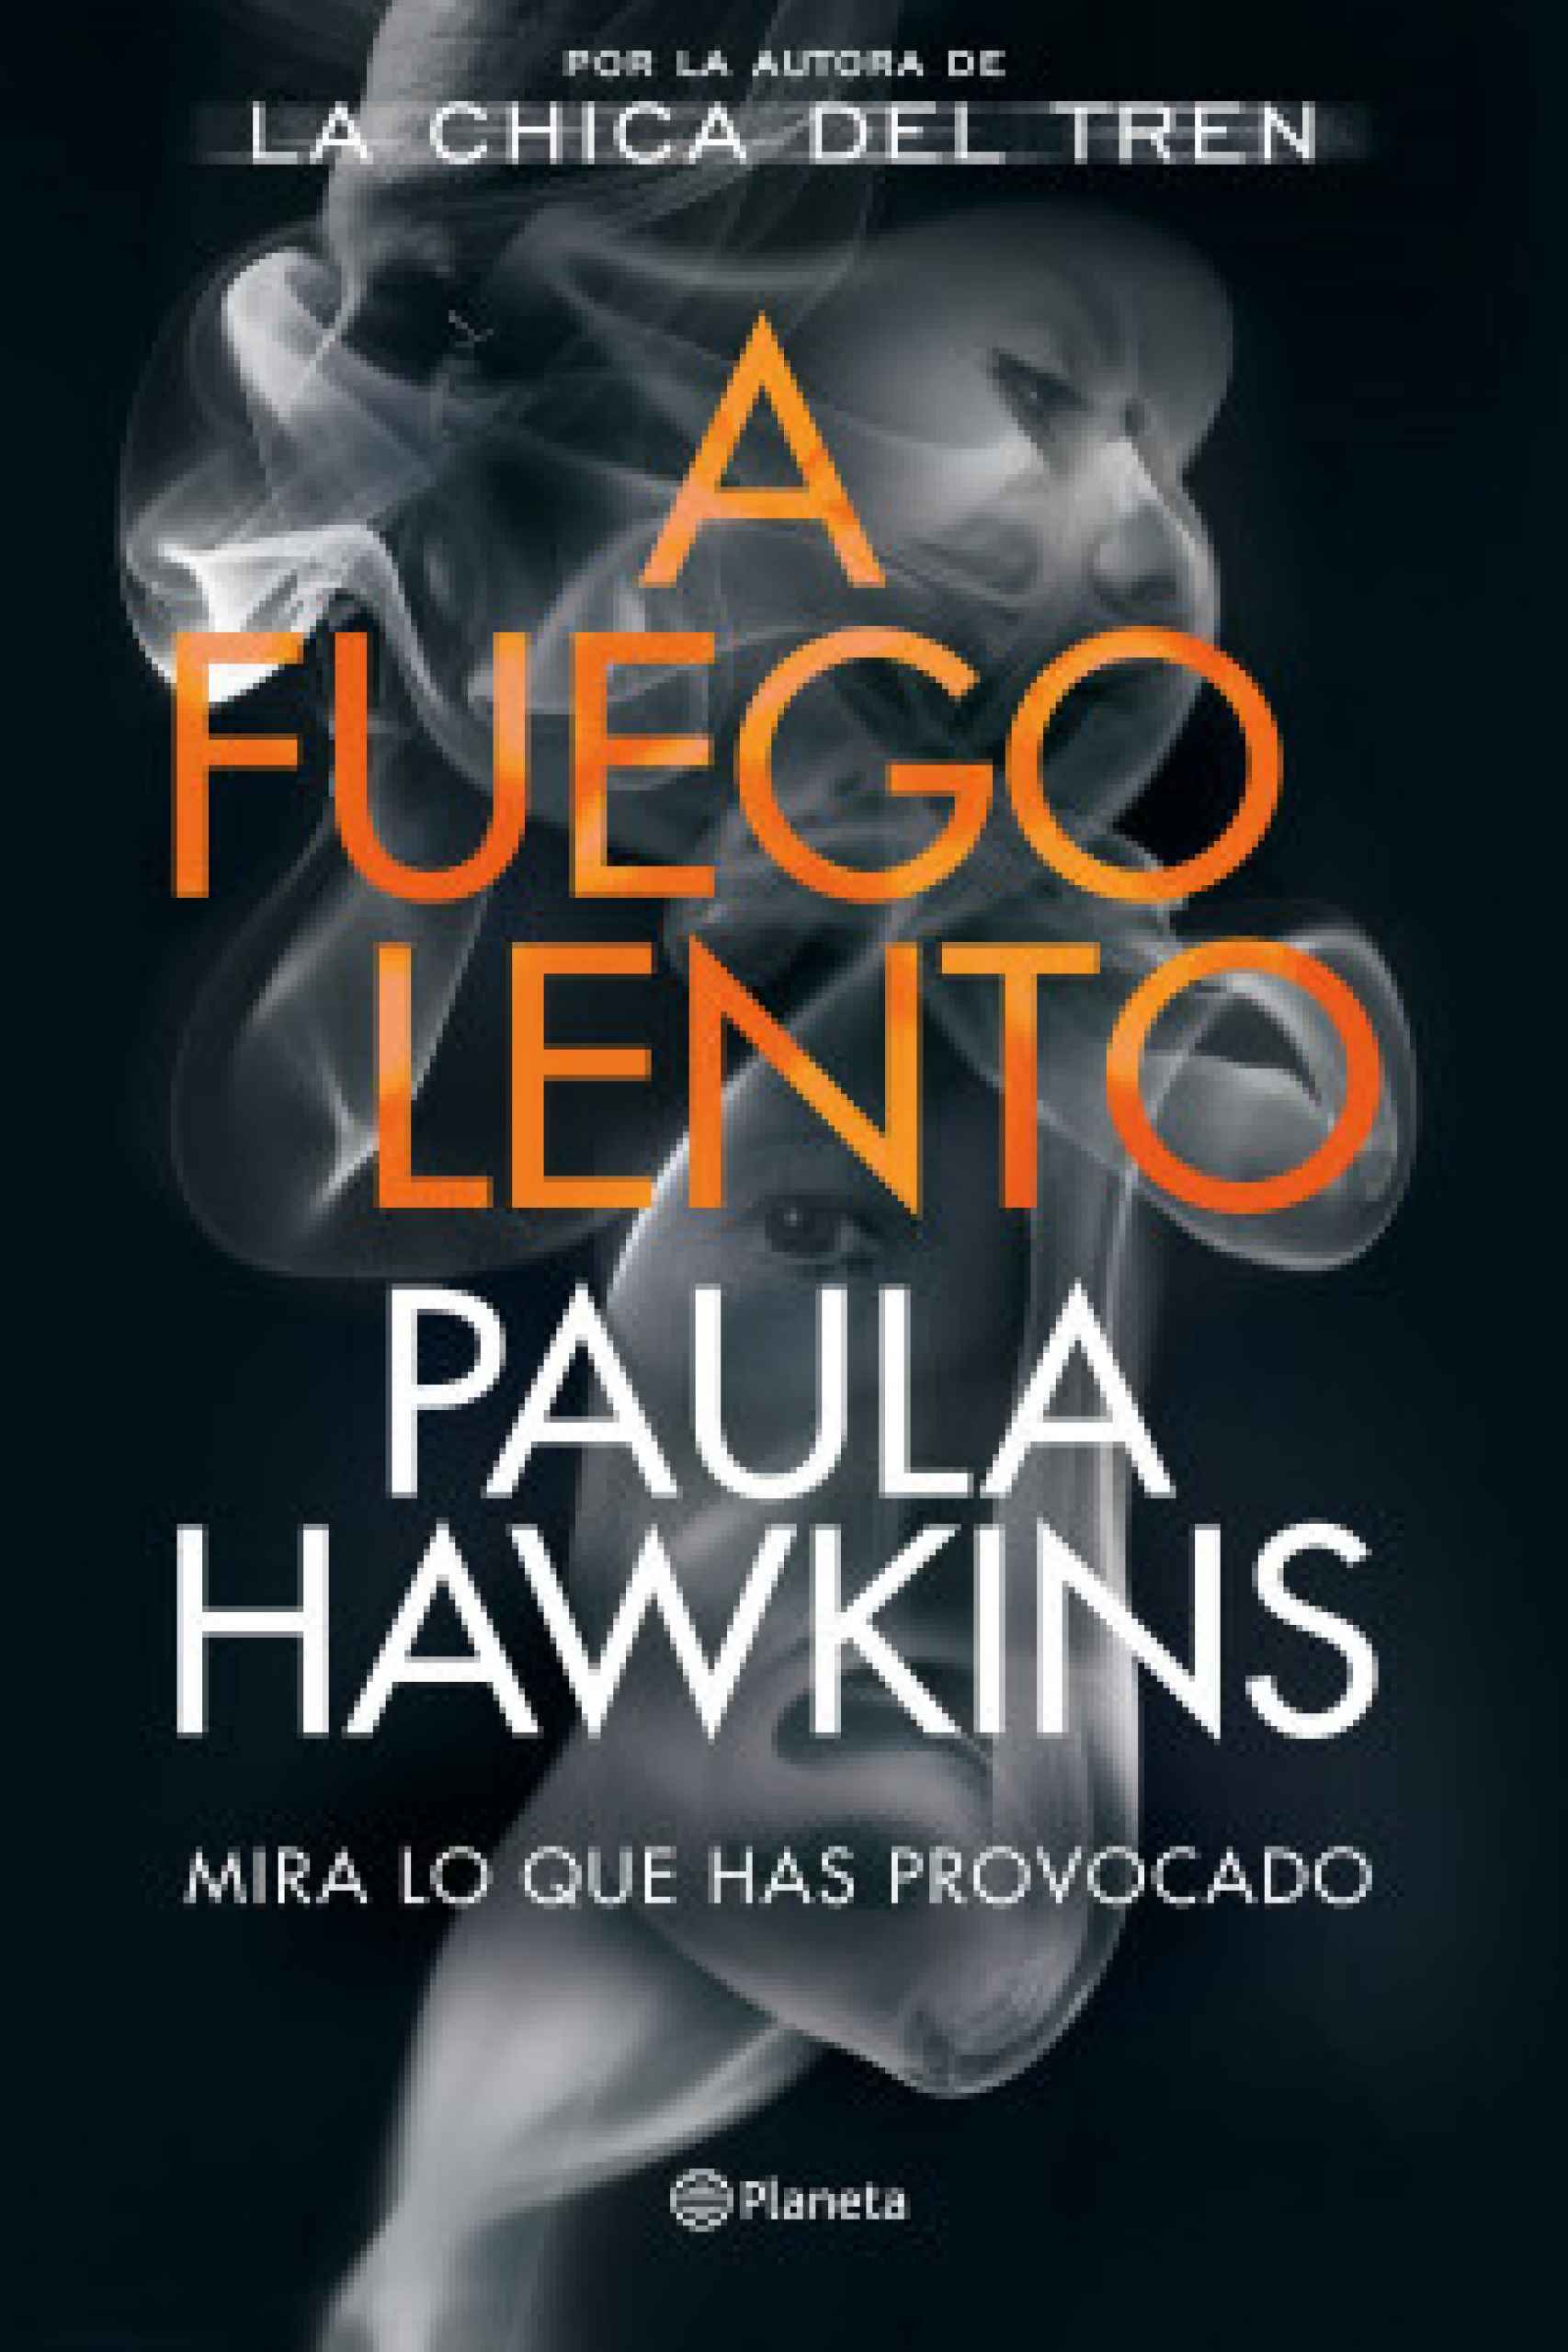 A fuego lento (Paula Hawkins)